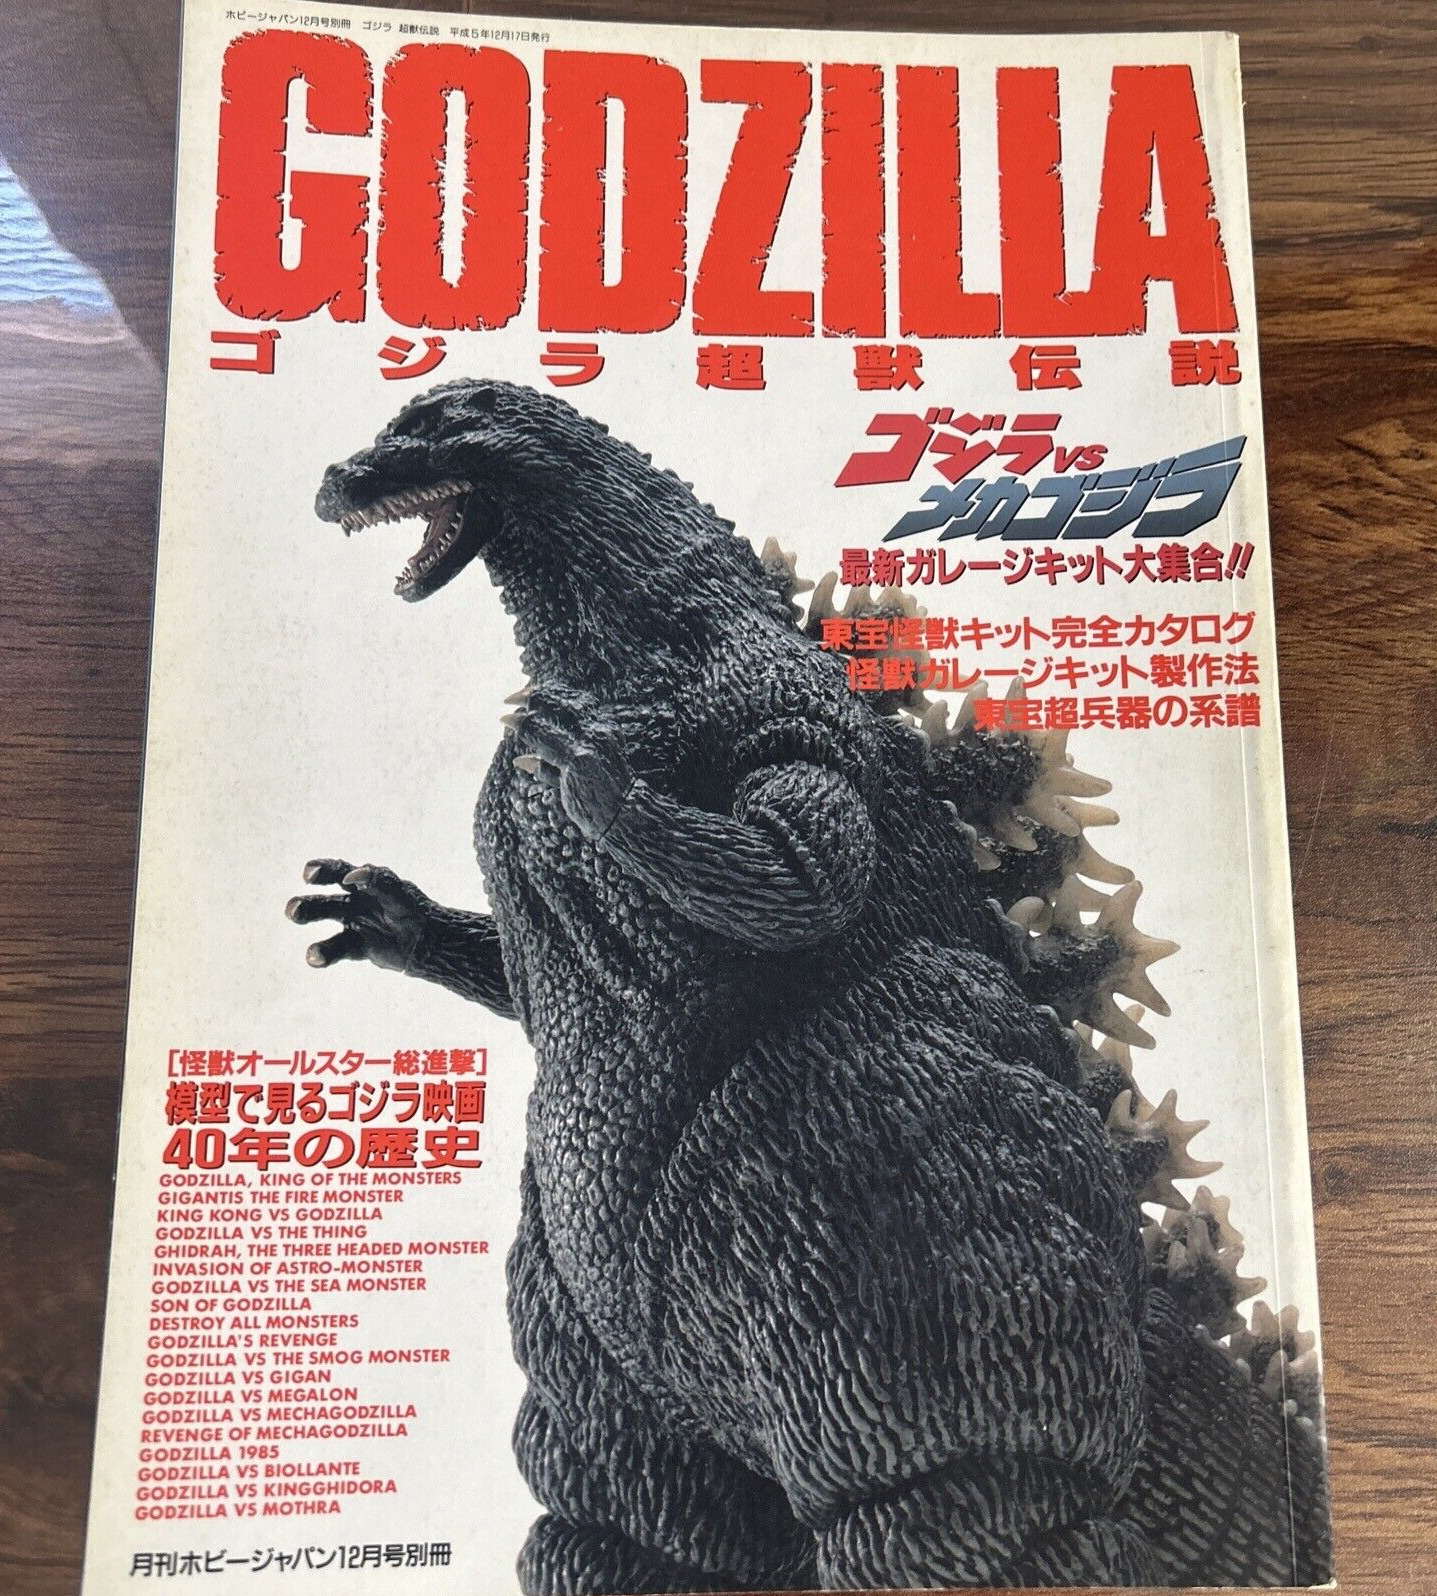 Godzilla Hobby Book - Hobby Japan / Special December 1993 Issue used Japan